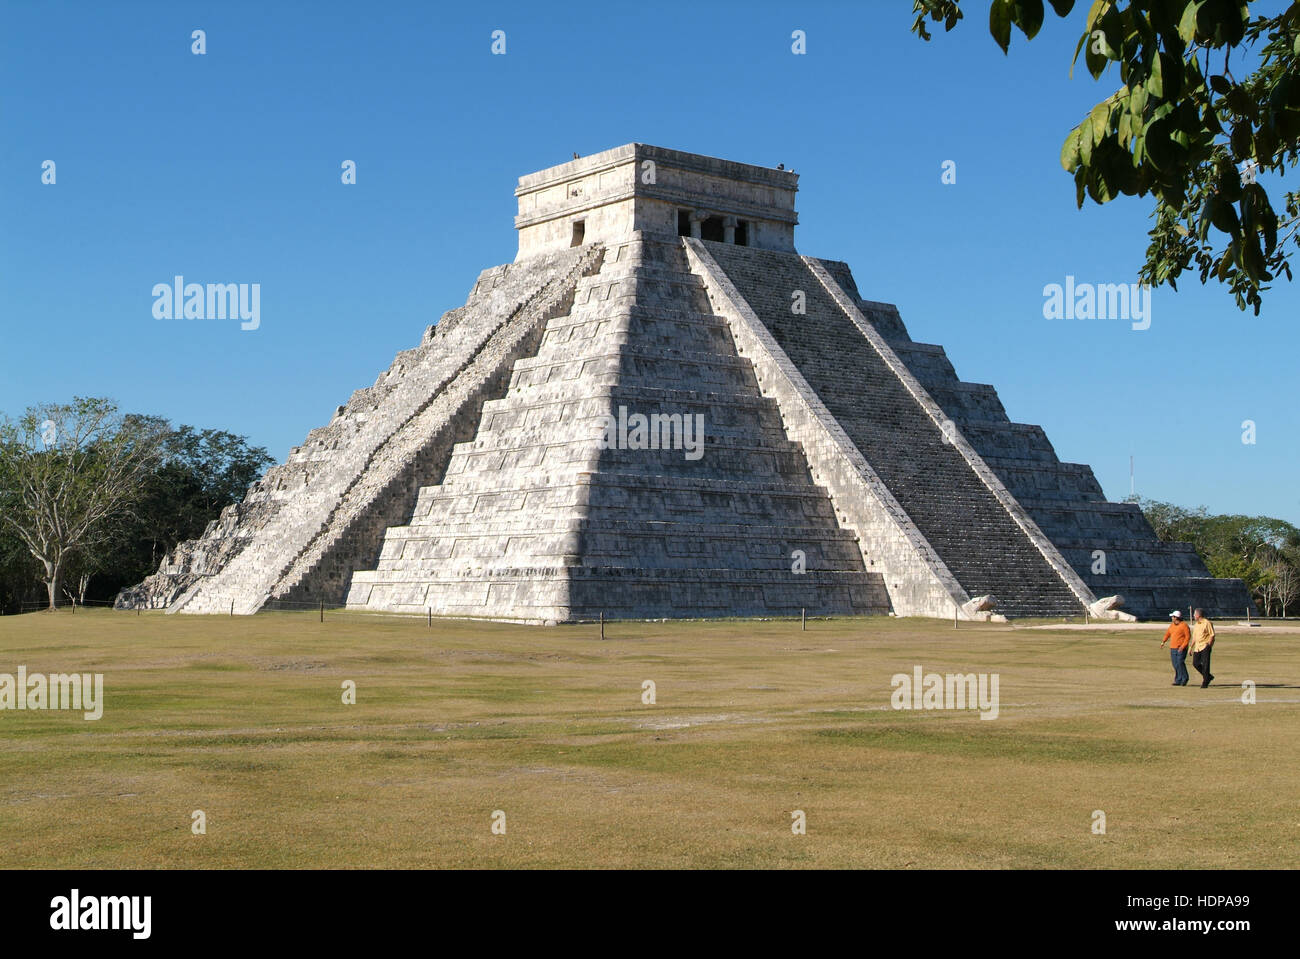 Chichen Itza, Mexico - 24 January 2009: Mayan pyramid of Kukulcan El Castillo in Chichen Itza, Mexico Stock Photo